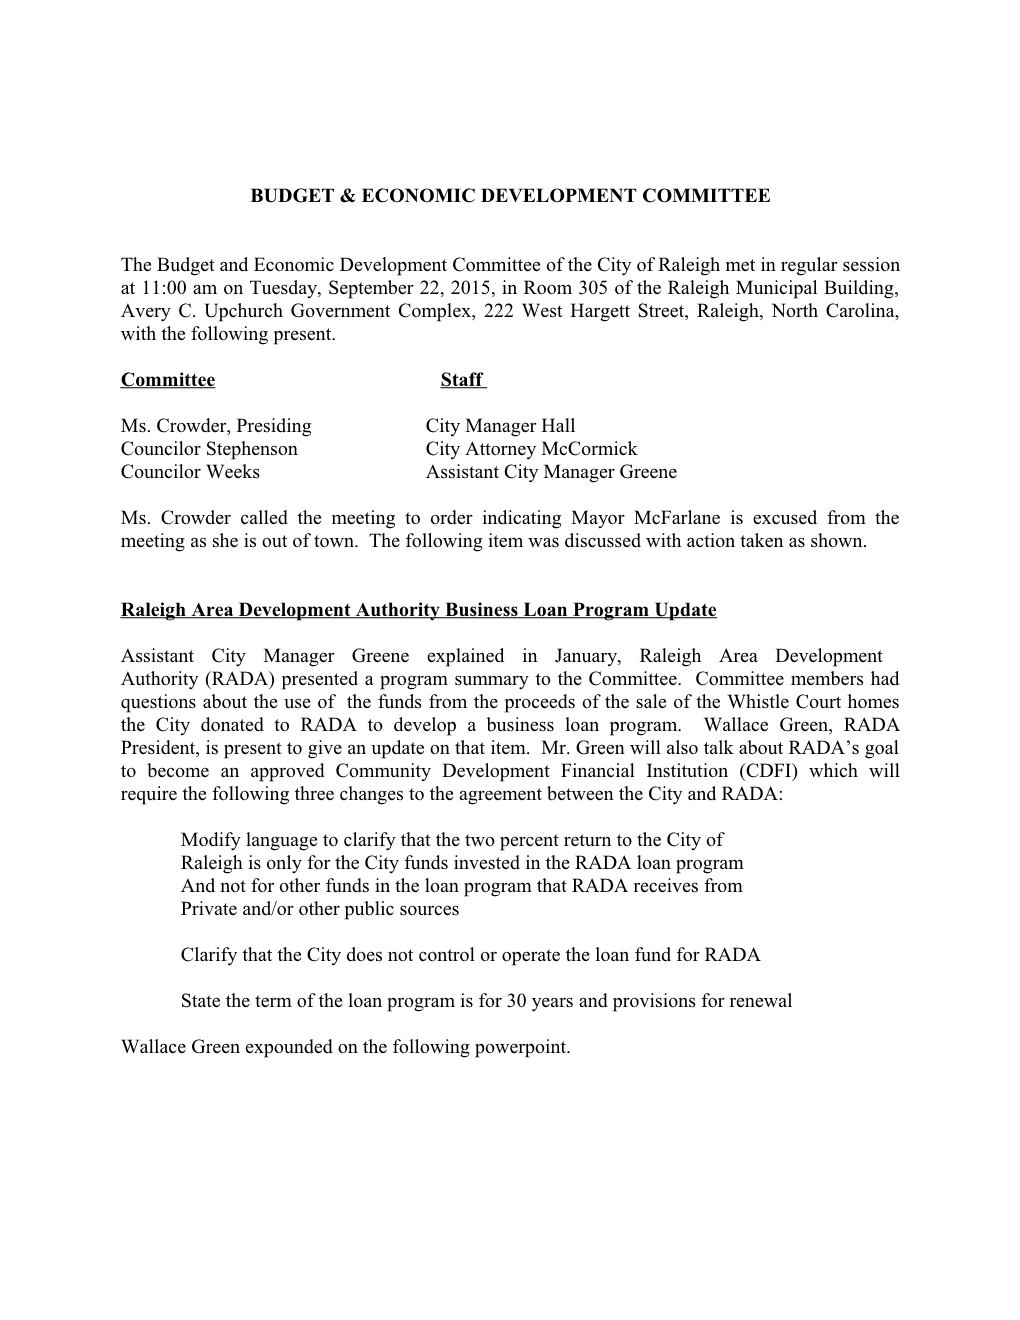 Budget & Economic Development Committee Minutes - 09/22/2015